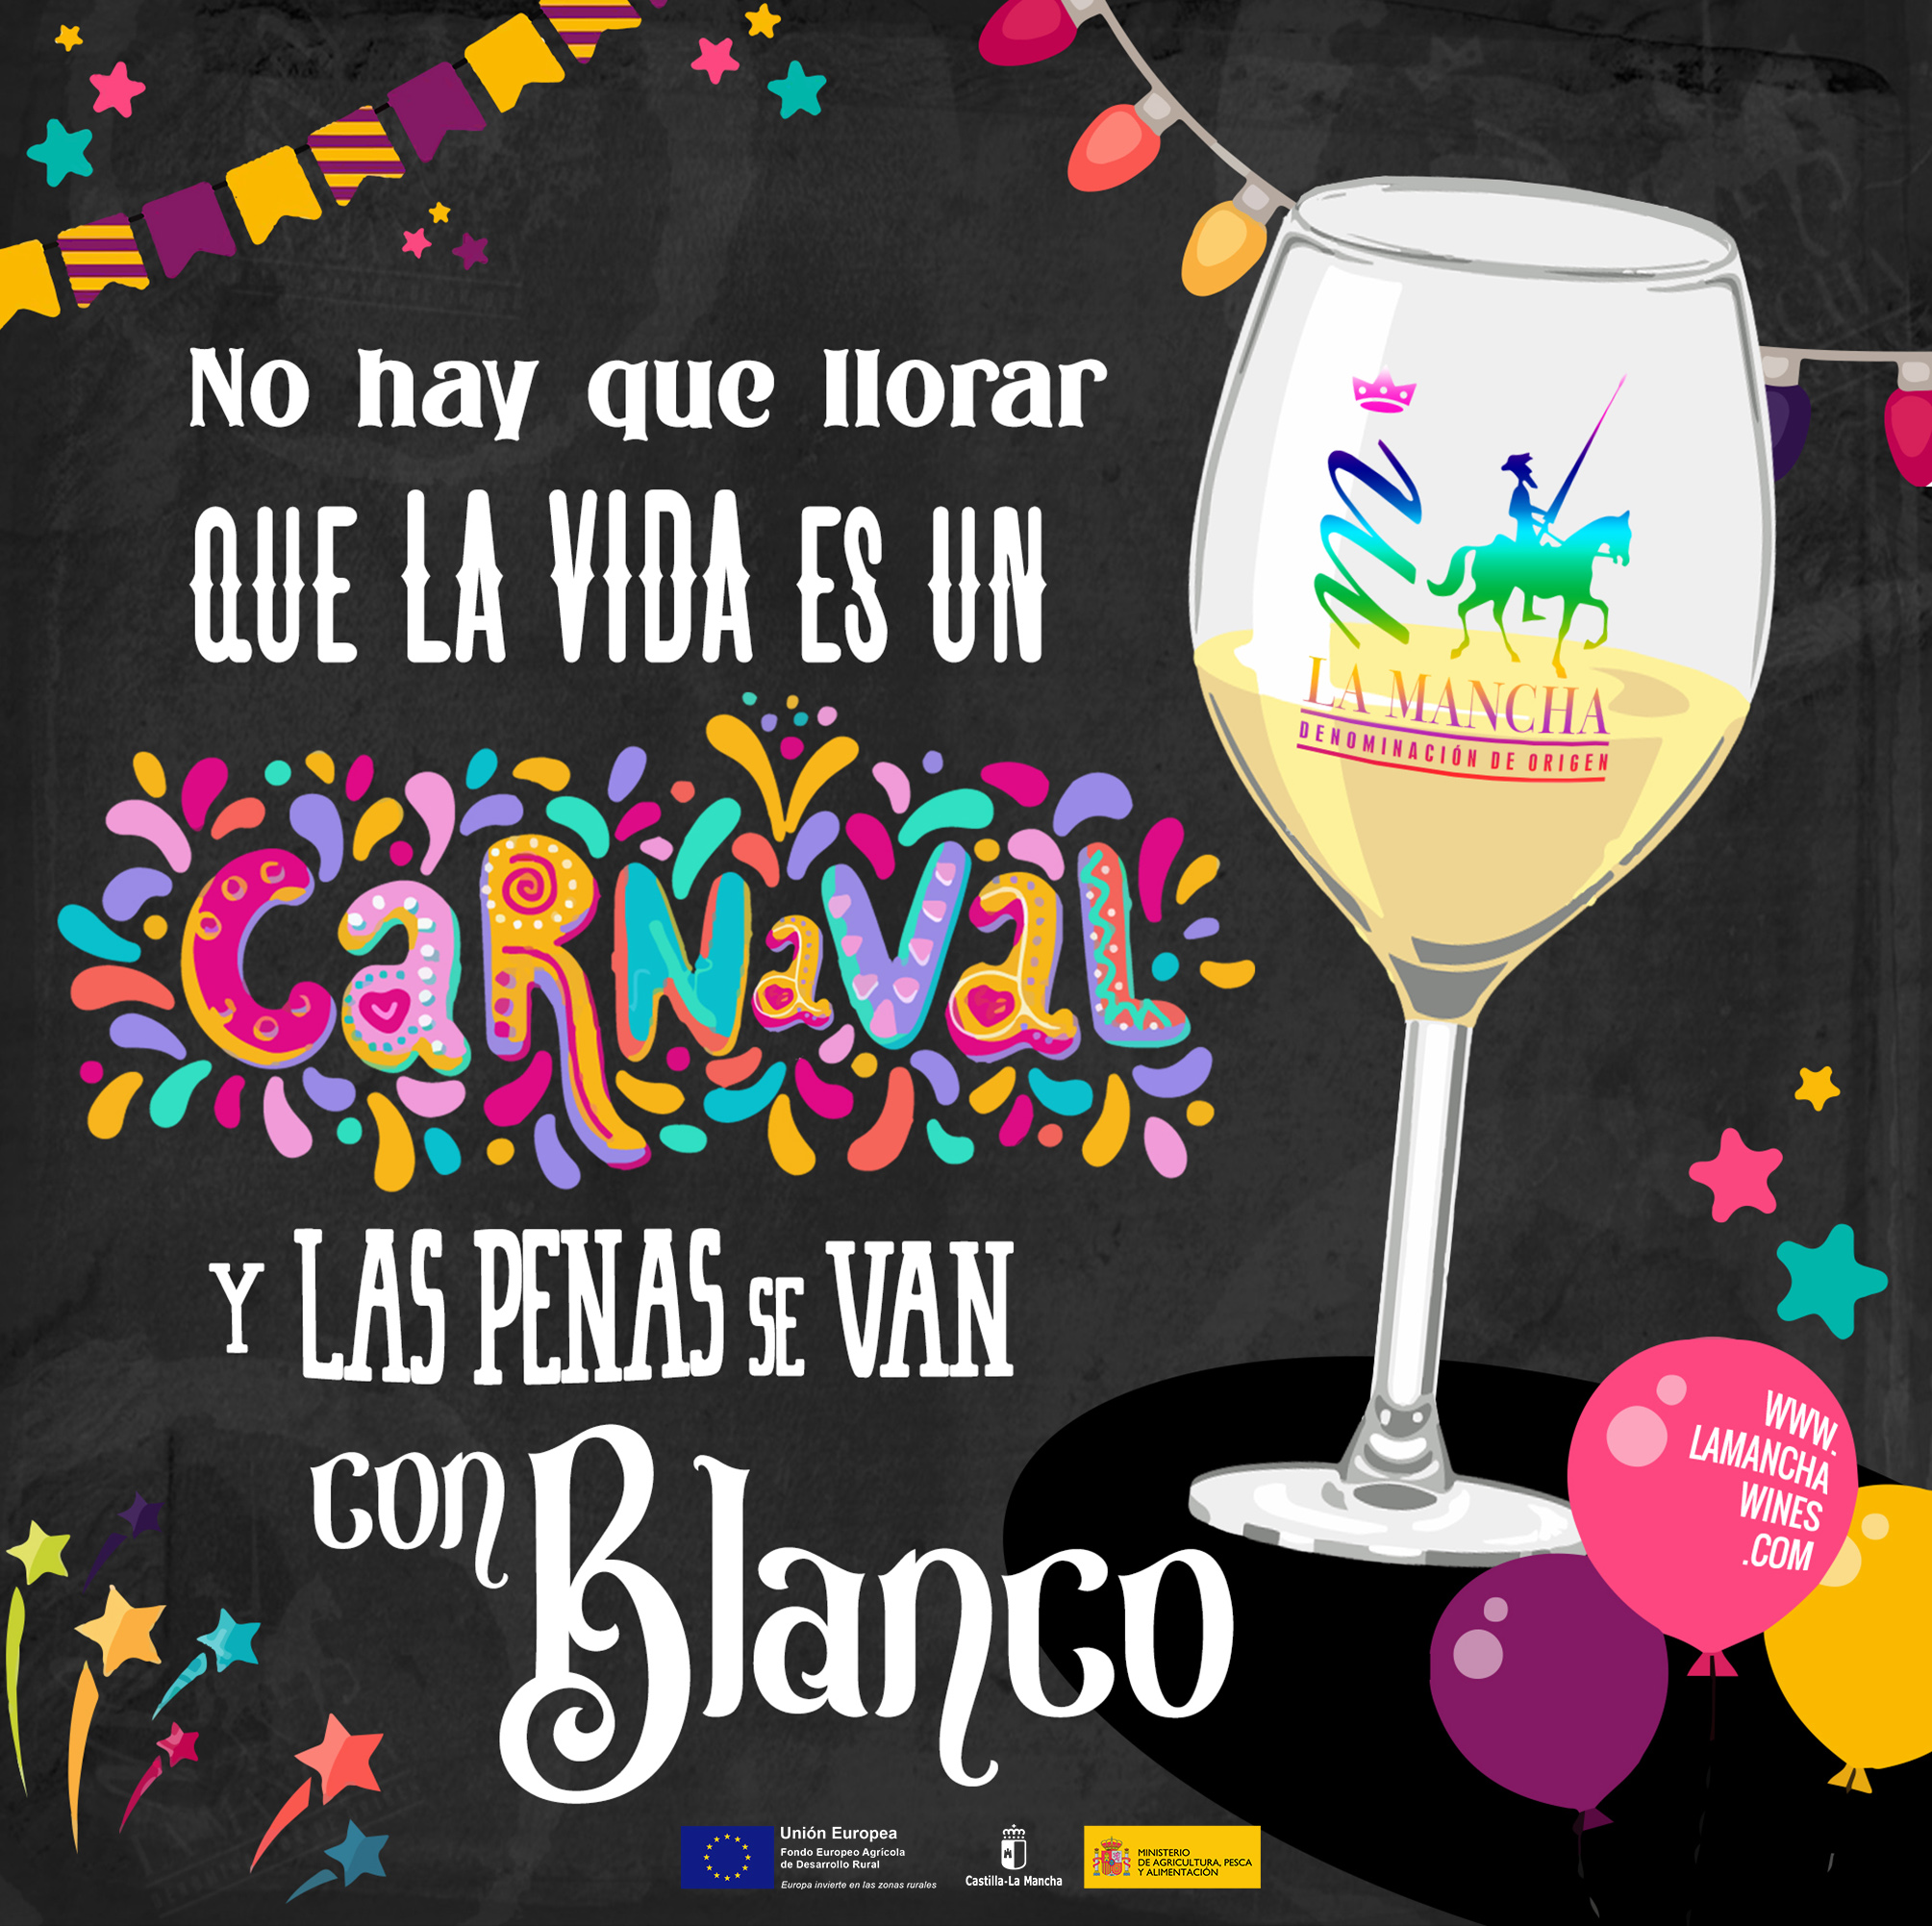 Carnaval-y-vino